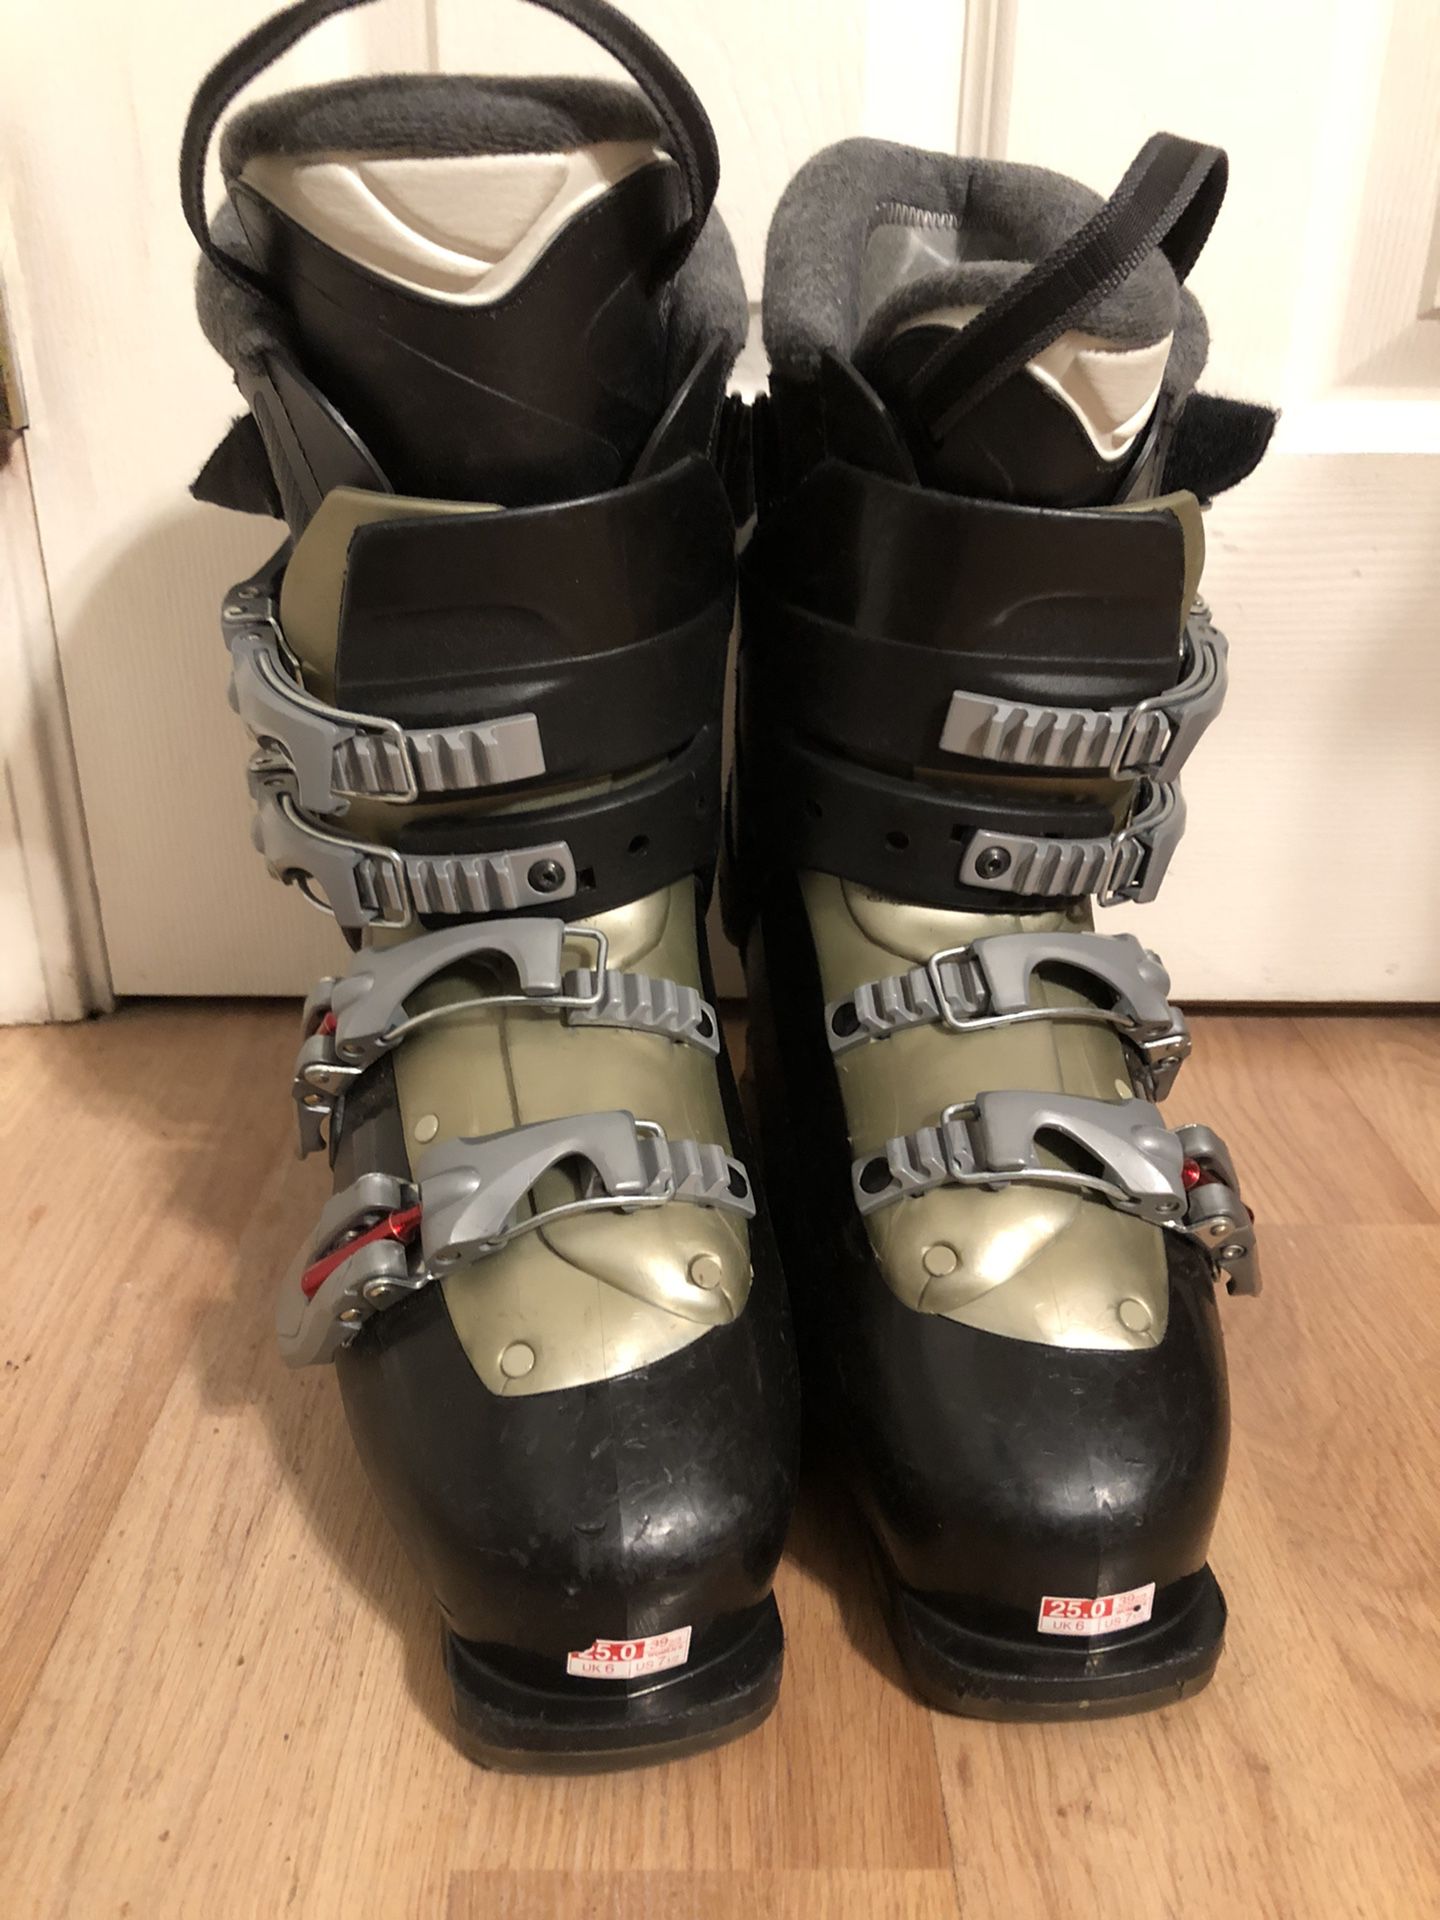 Salomon Ski Boots size 7 1/2 or 25.0 Ski Boots